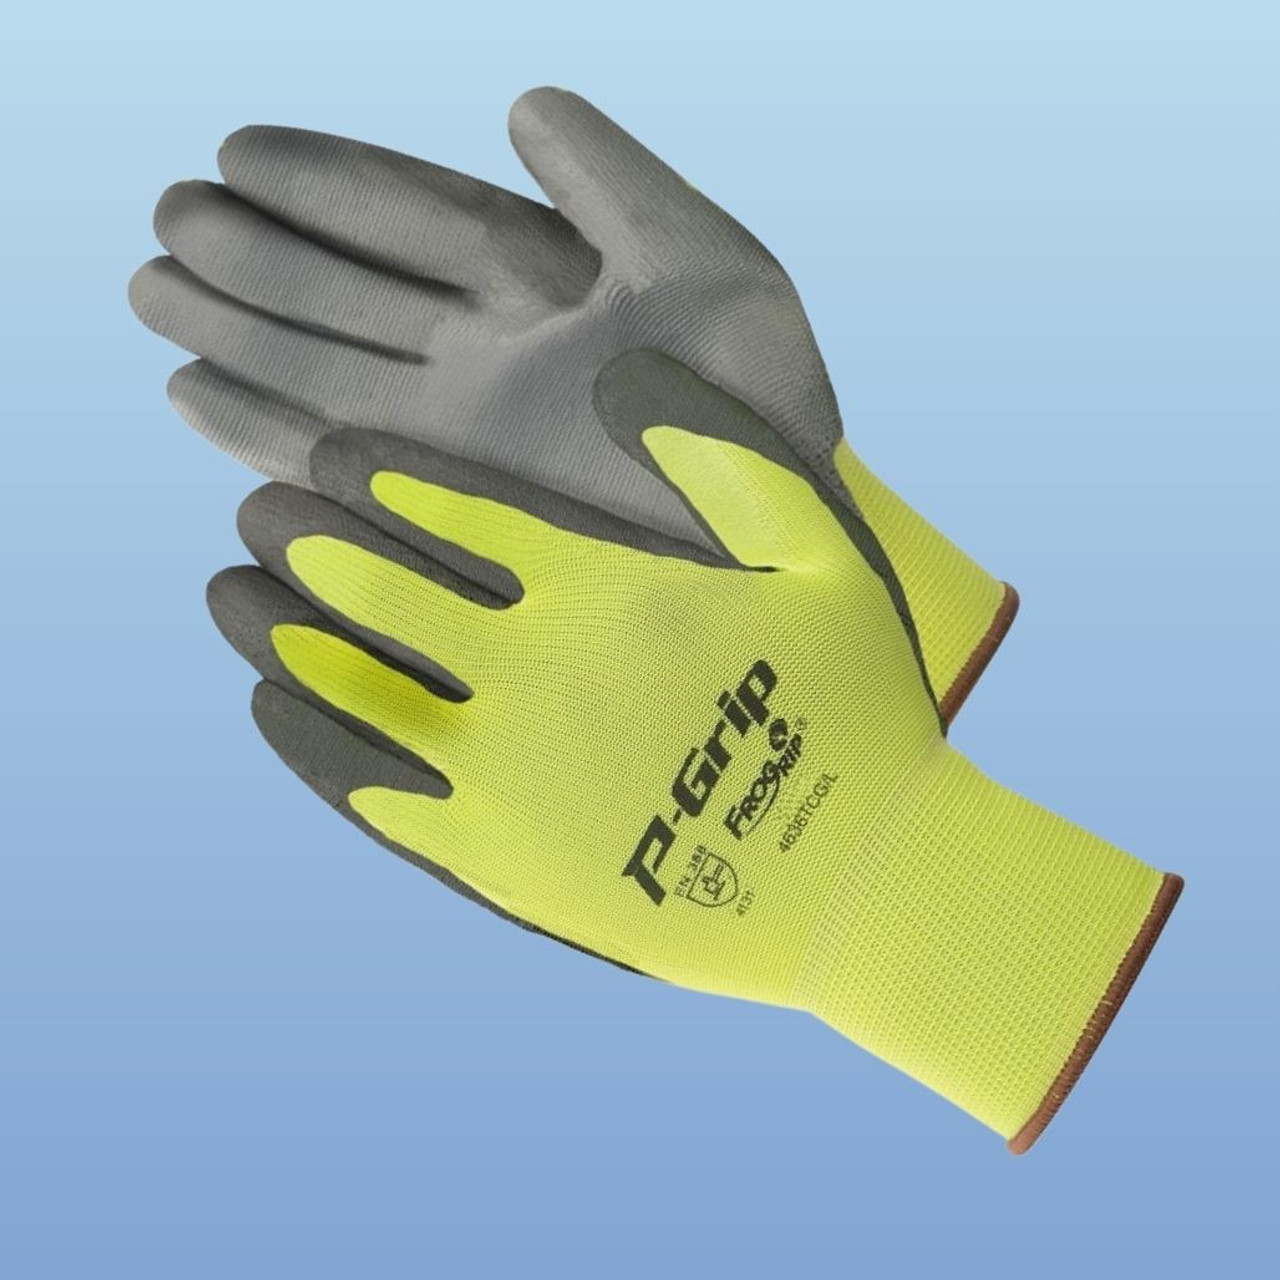 P-Grip Black Nylon/Polyurethane General Purpose Work Gloves with